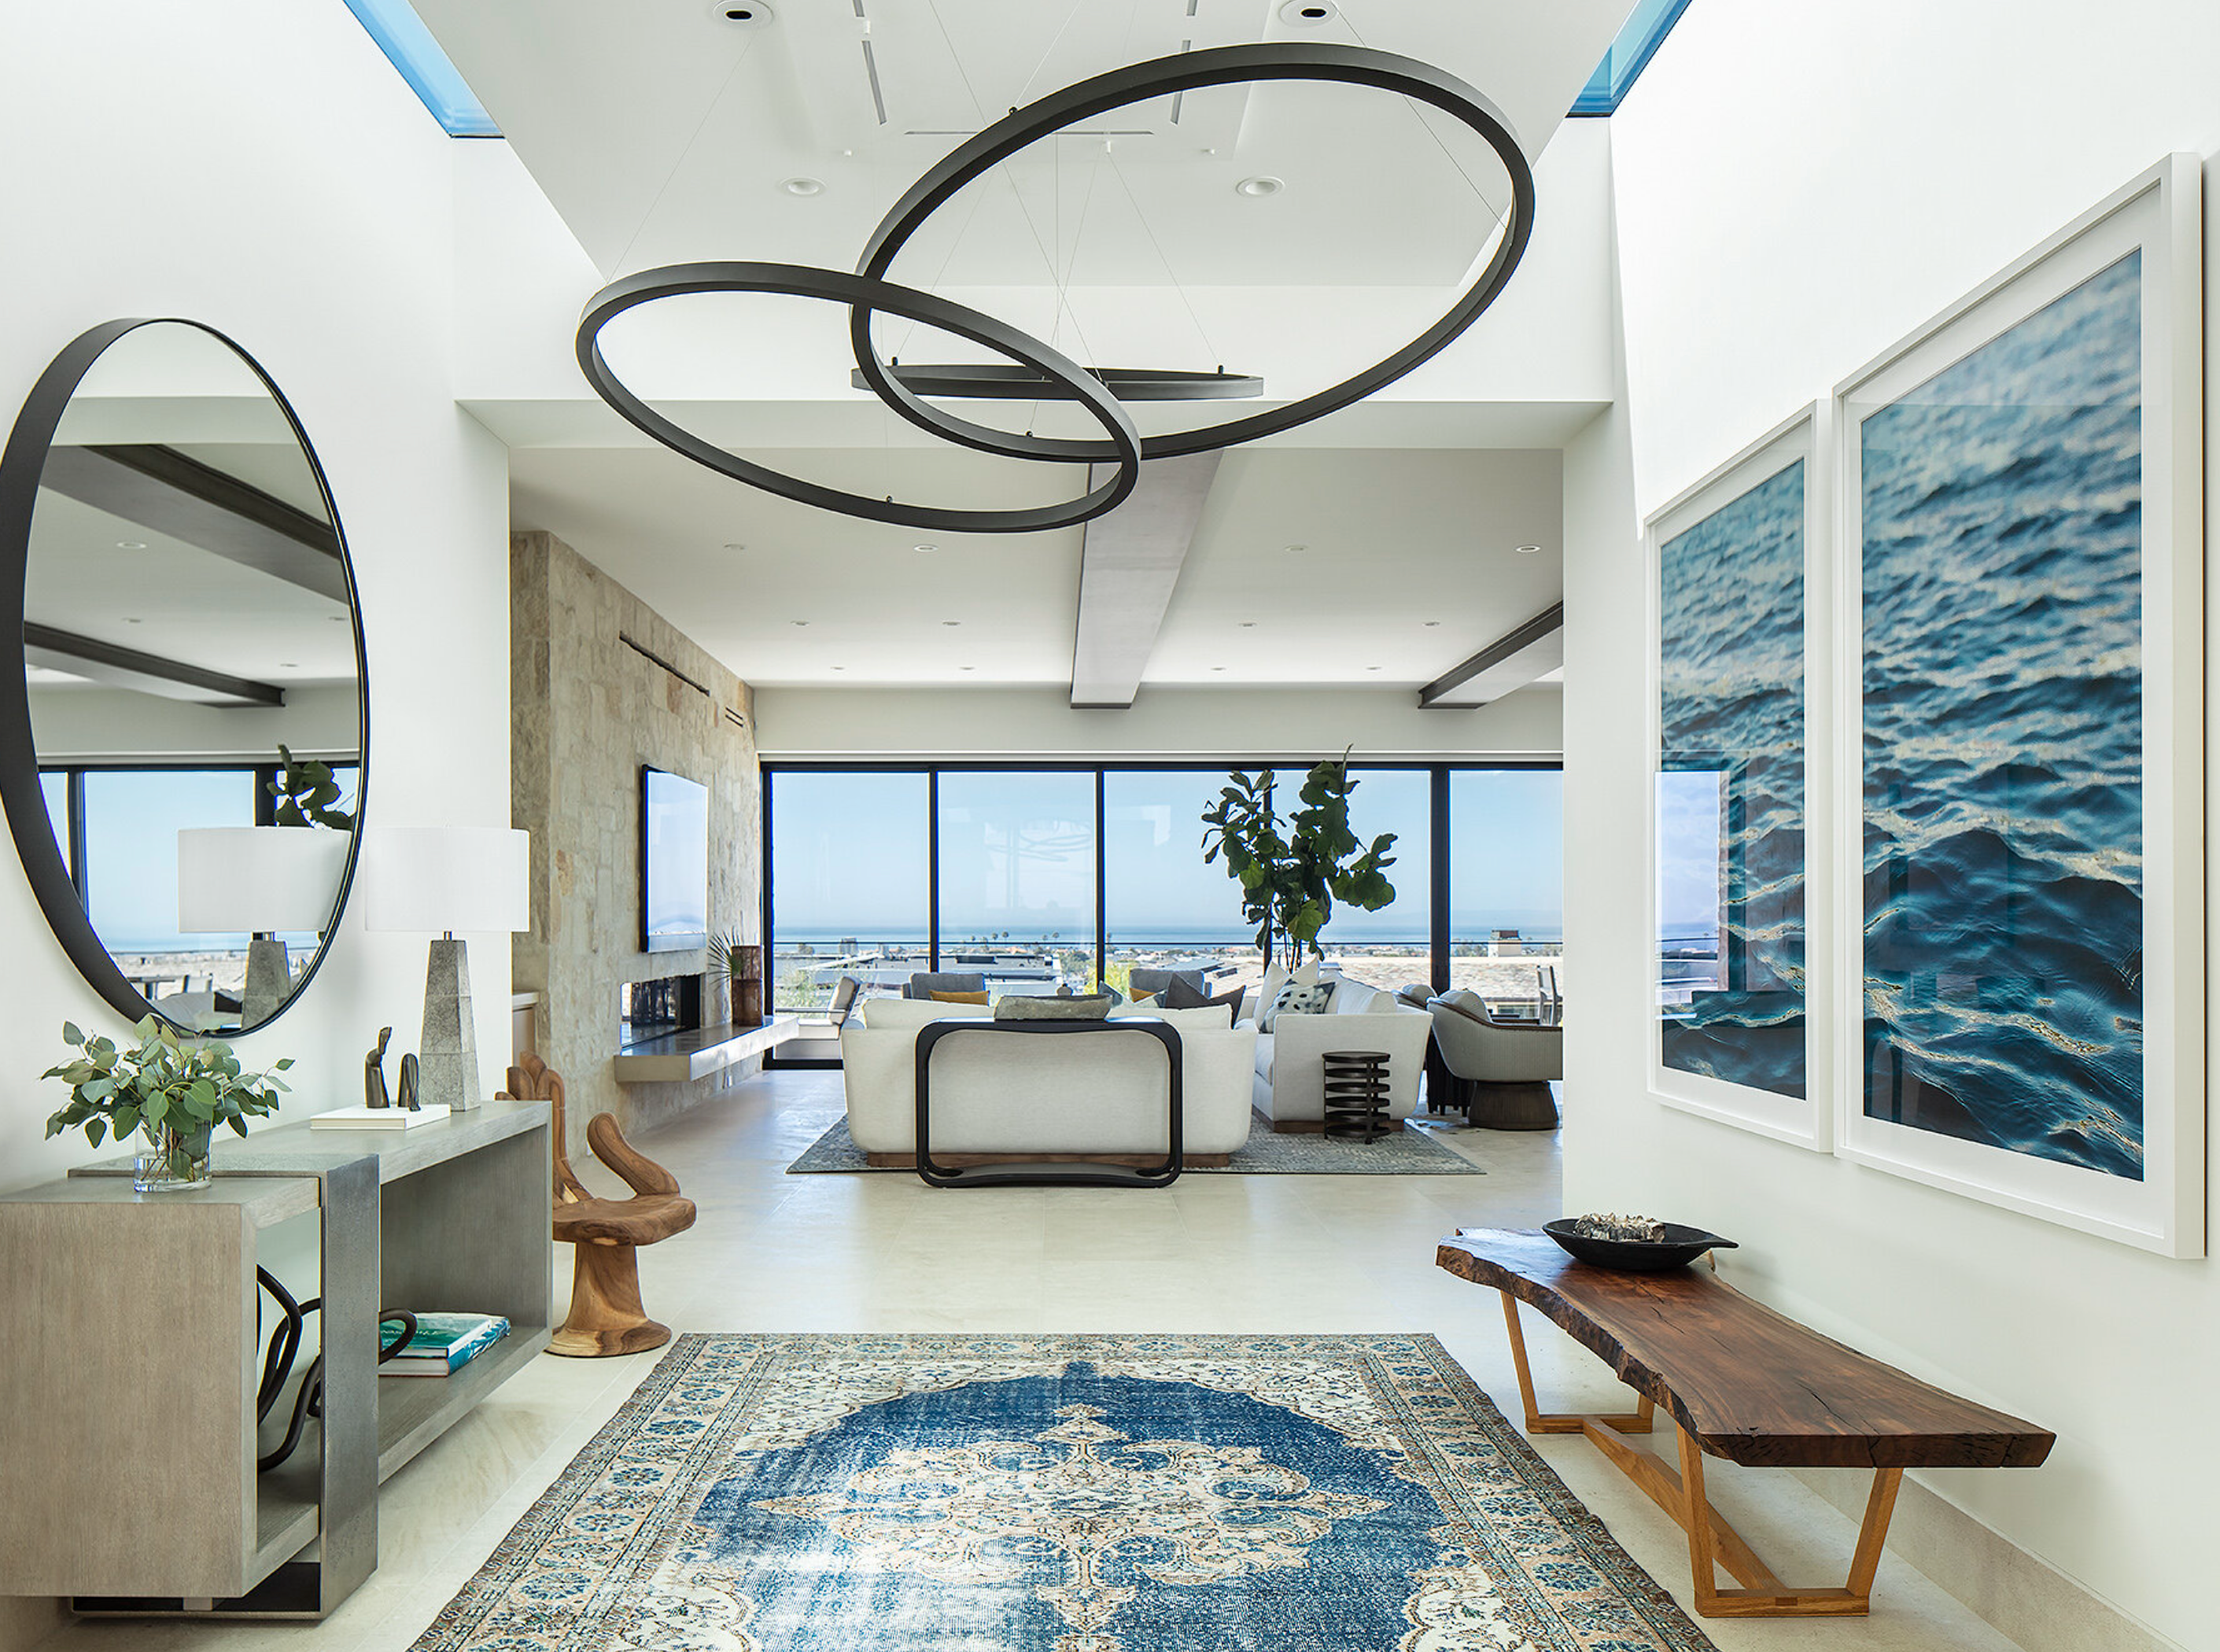 perfect photography shop for interior designers, coastal and palm tree photography - ARIANE MOSHAYEDI FINE ART